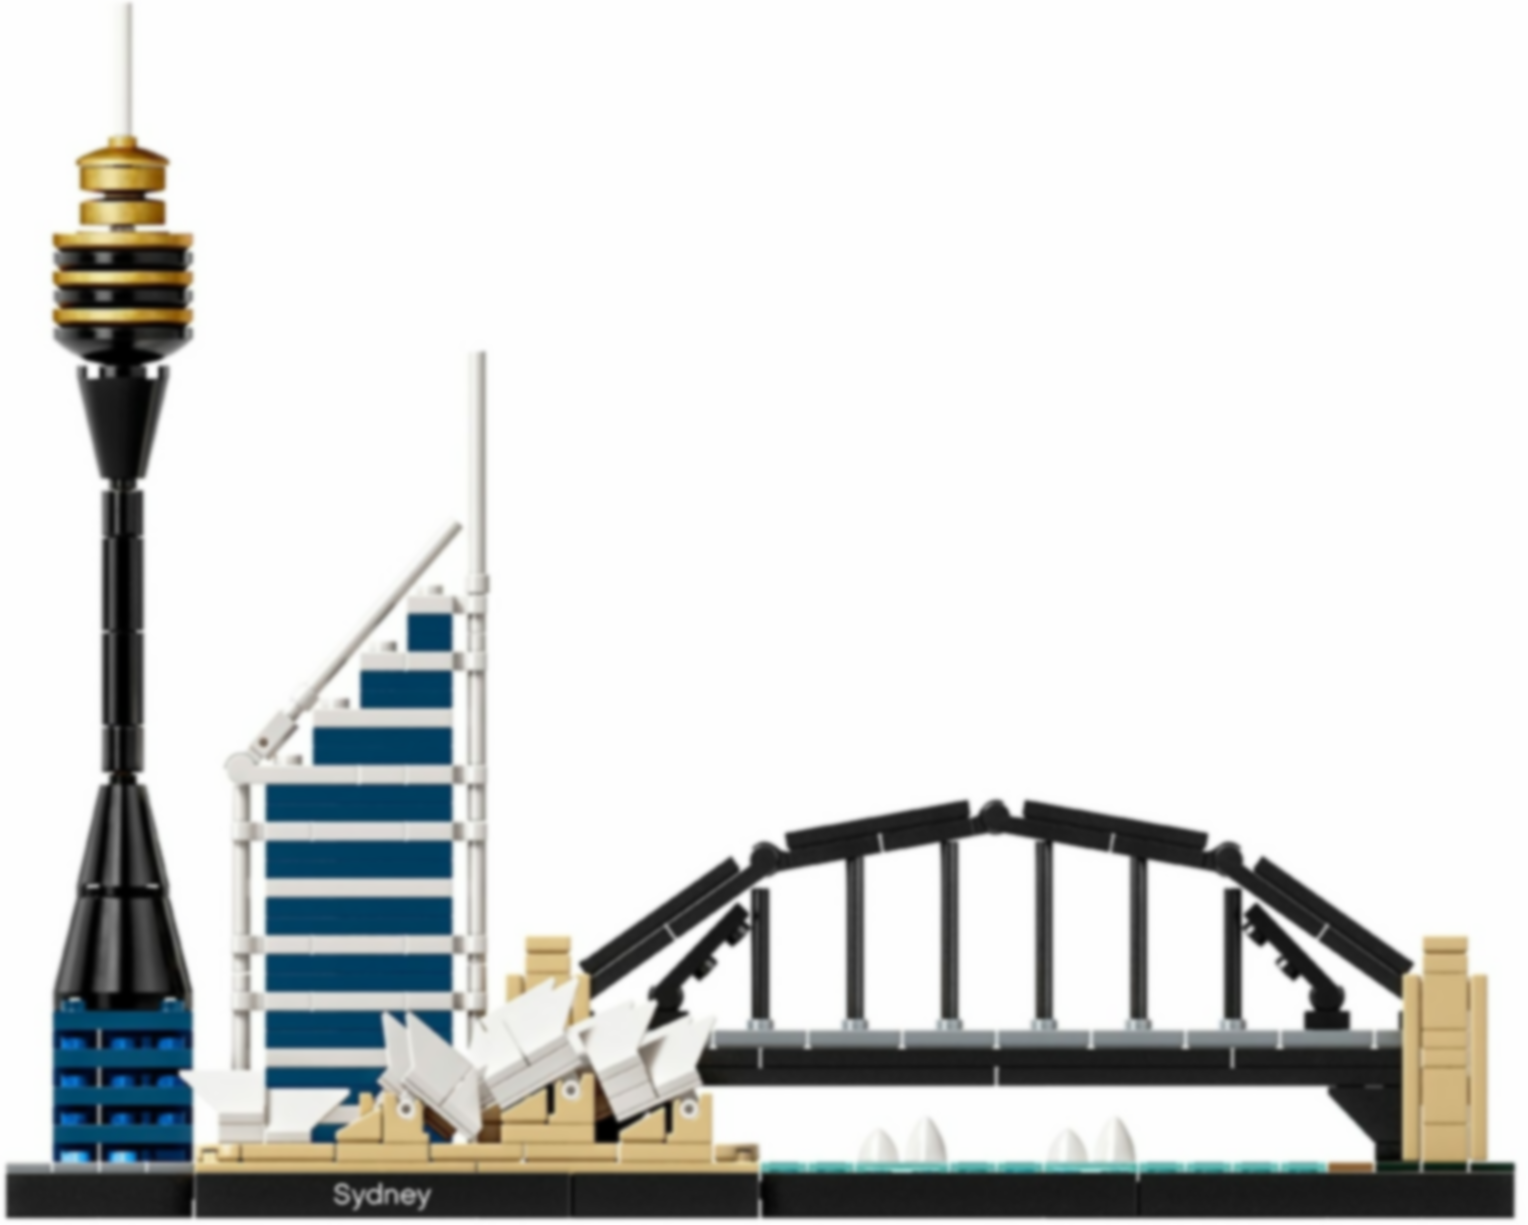 LEGO® Architecture Sydney komponenten